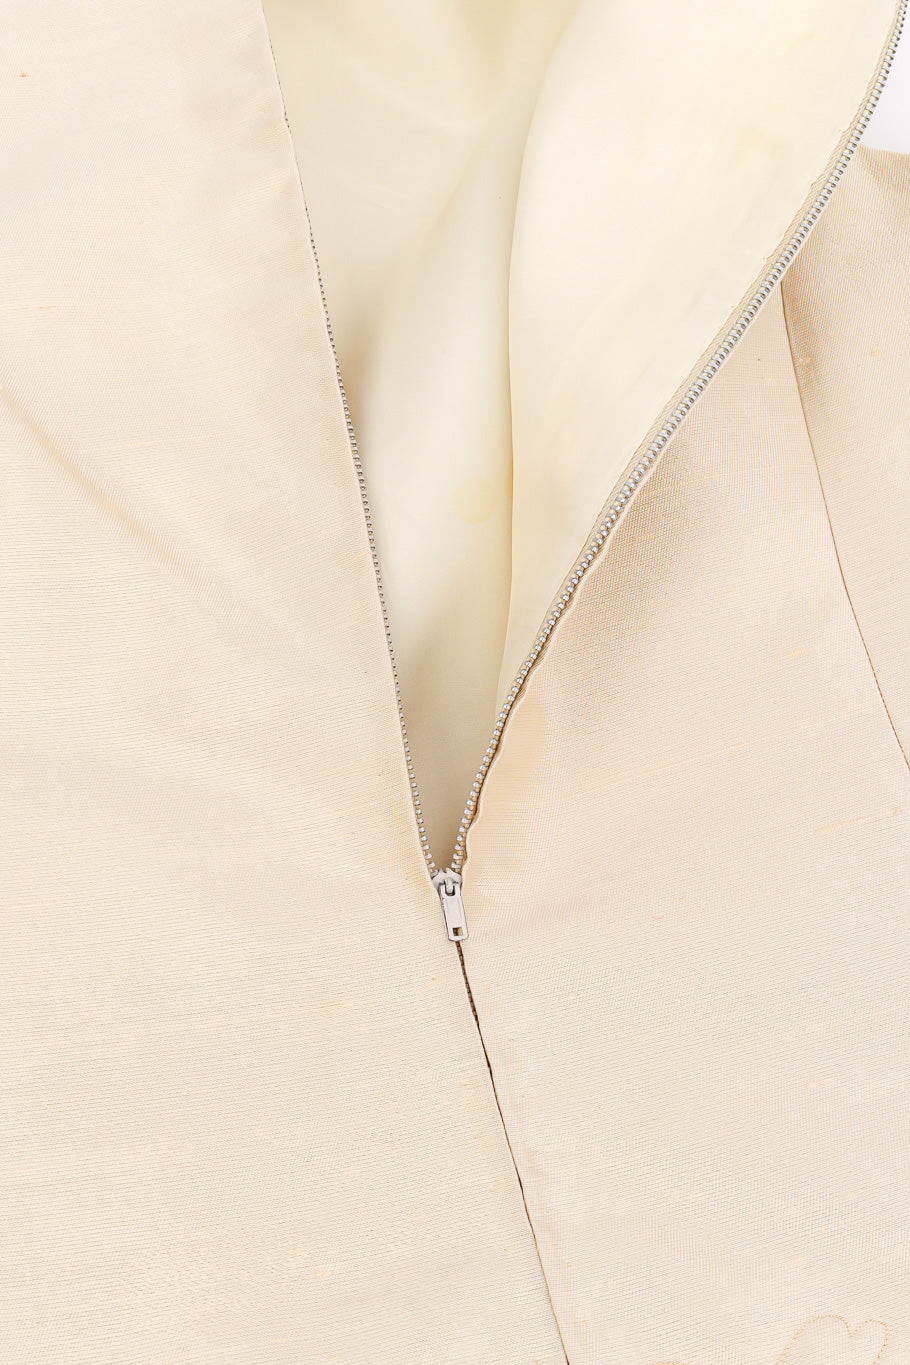 Silk set by Dynasty flat lay top zipper @recessla